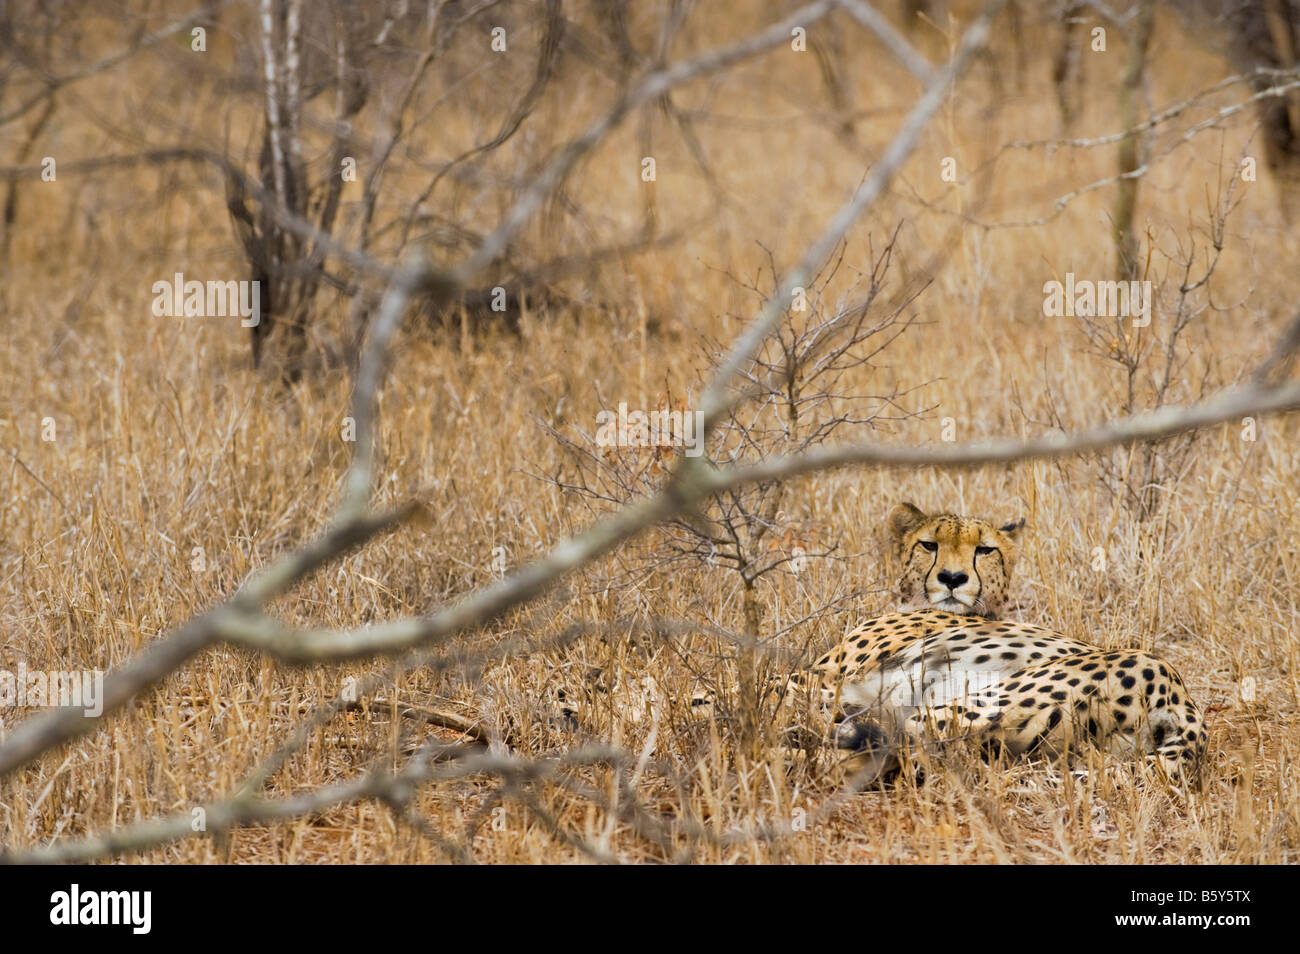 WILDLIFE wild cheetah gepard Acinonyx jubatus in ambience prey southafrica south-afrika wilderness south africa Stock Photo